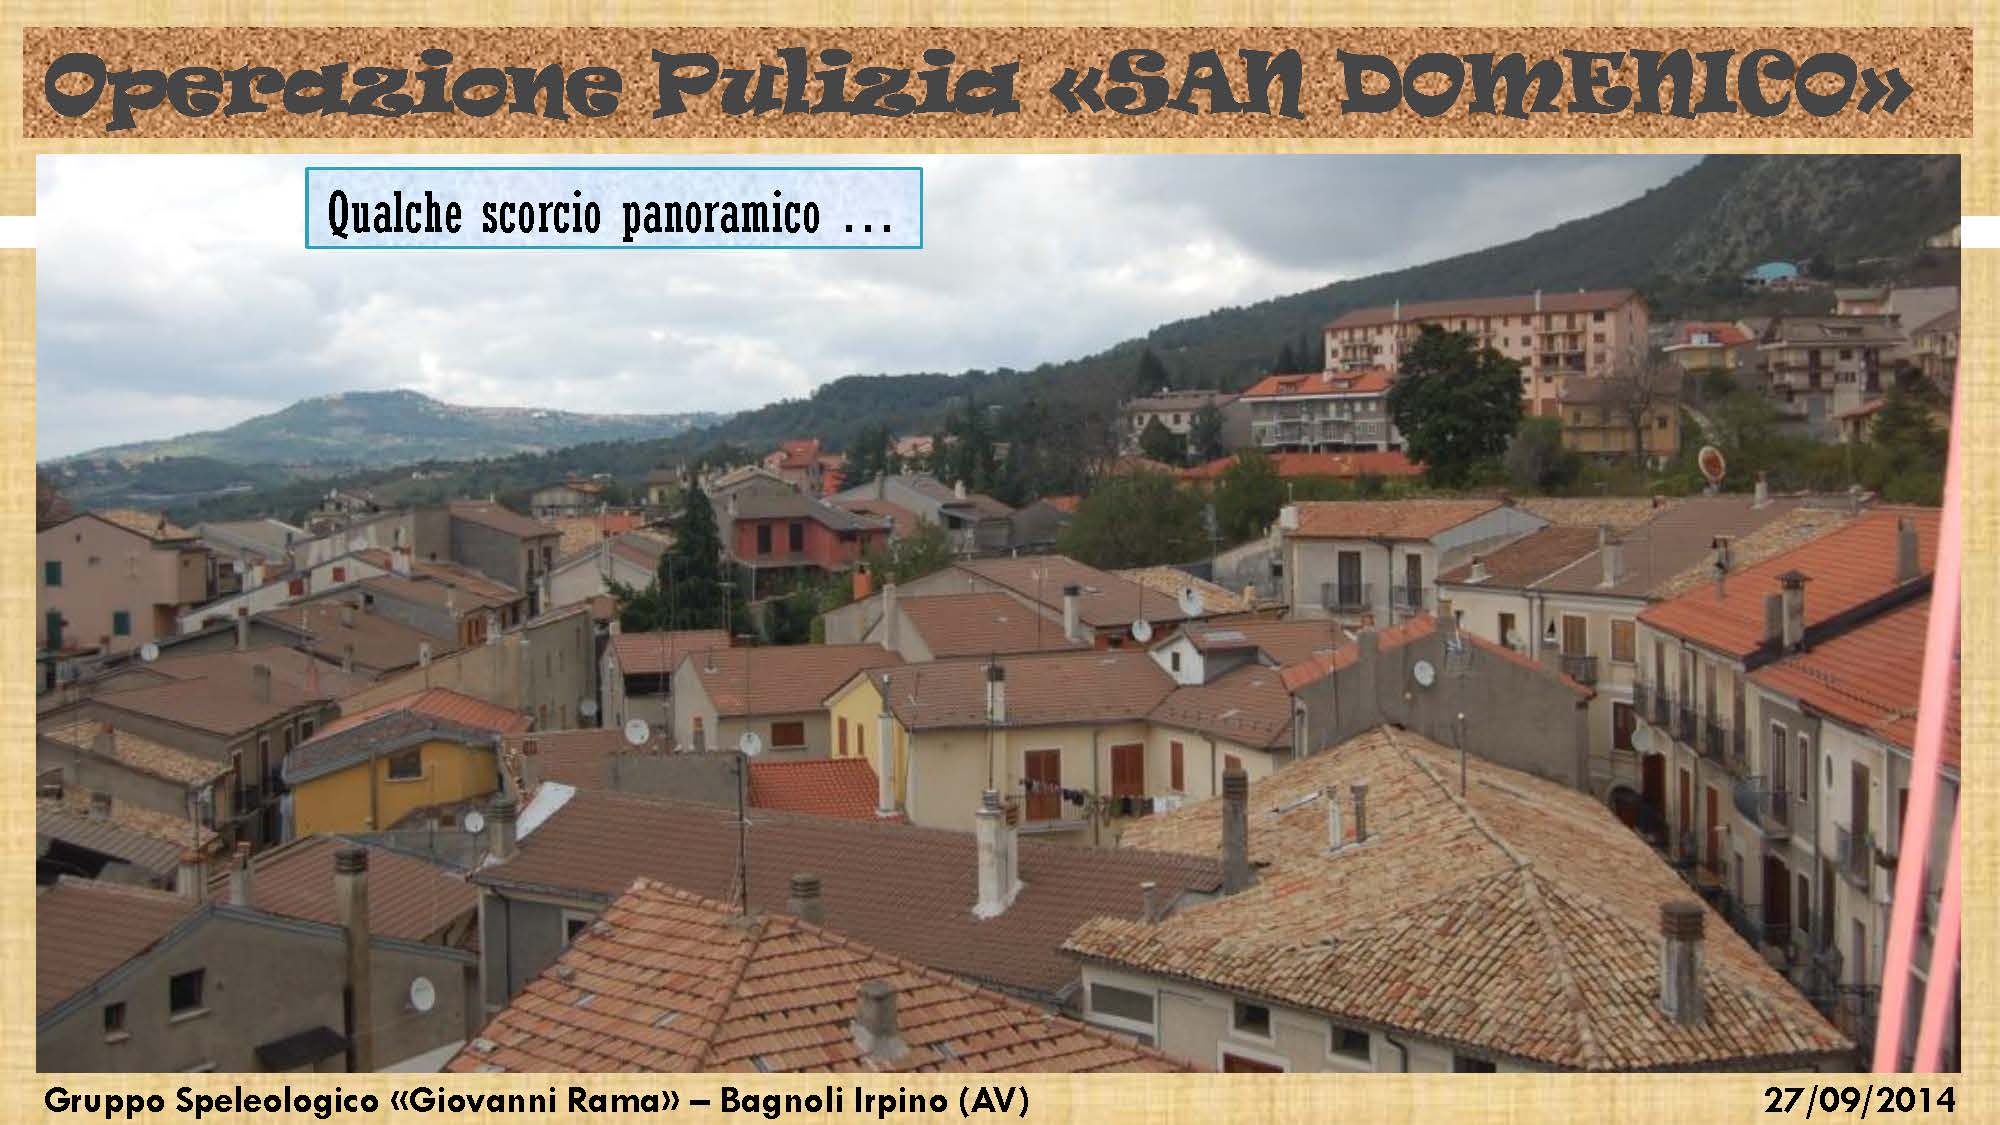 Bagnoli-Pulizia-San-Domenico-2014_Pagina_25